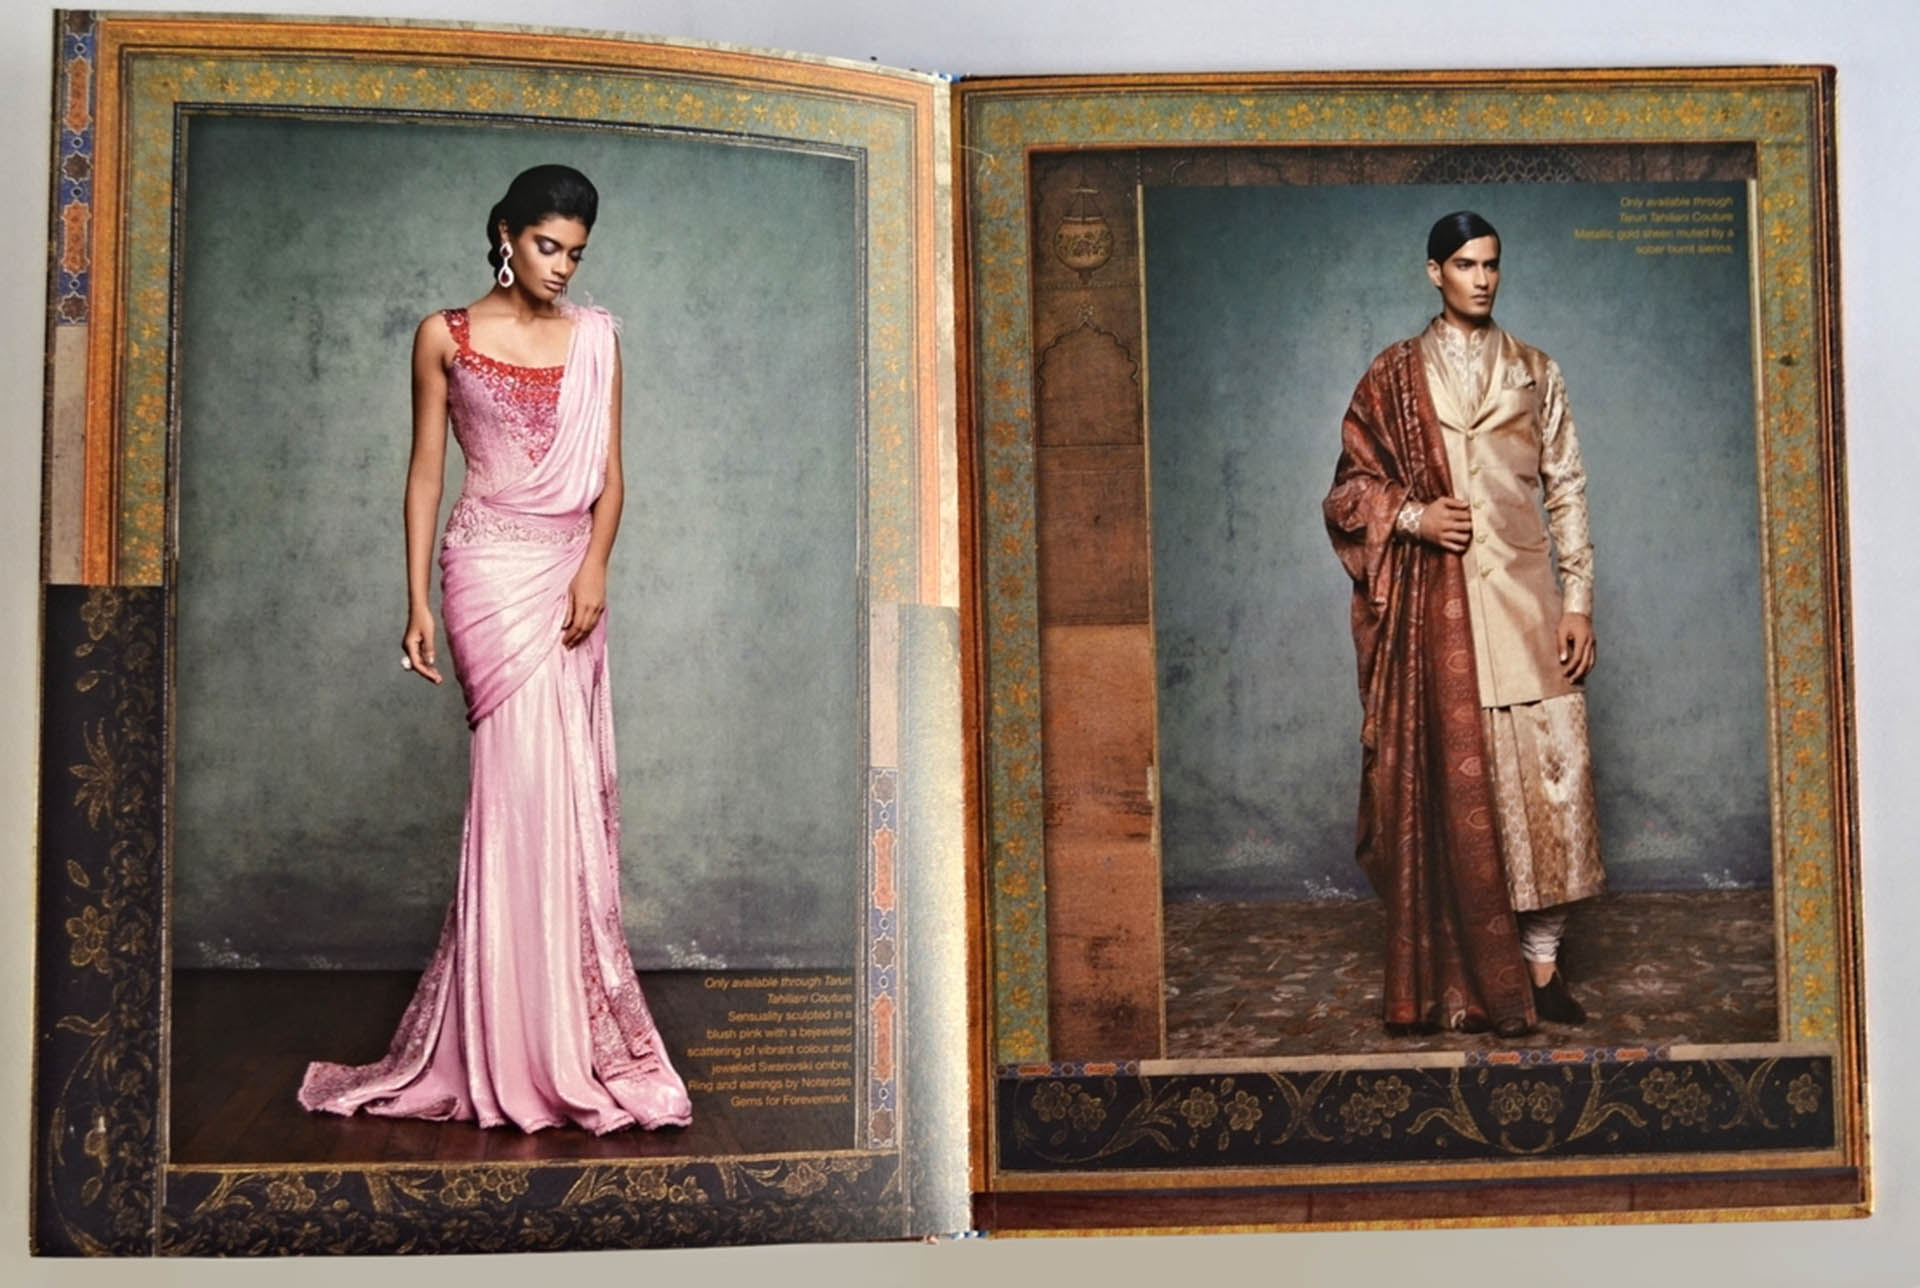 Catalogue design to promote Tarun Tahiliani Design Studio who create couture with an Indian sensibility